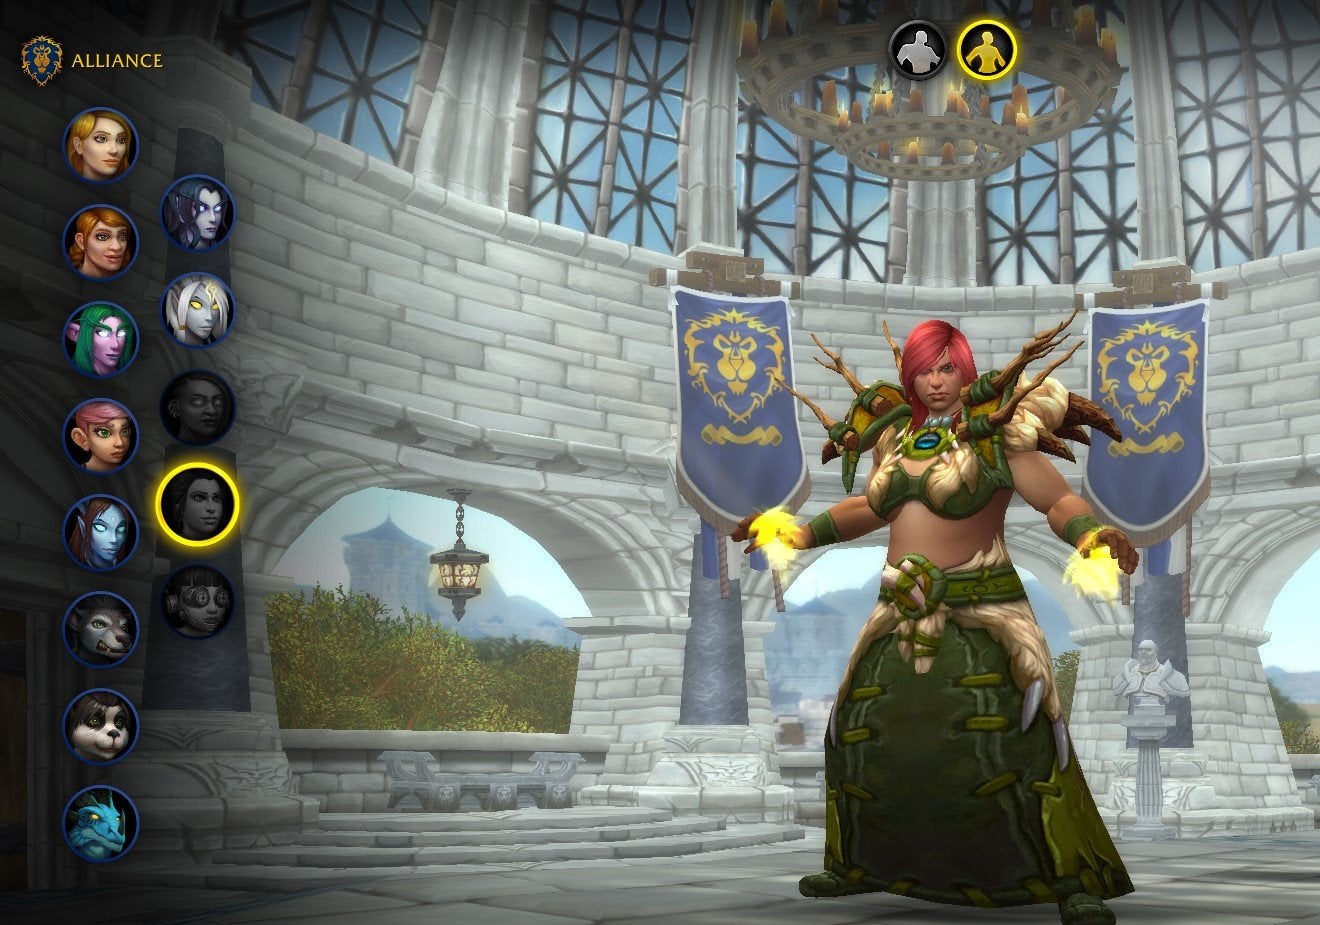 A Kul'Tiran in World of Warcraft.